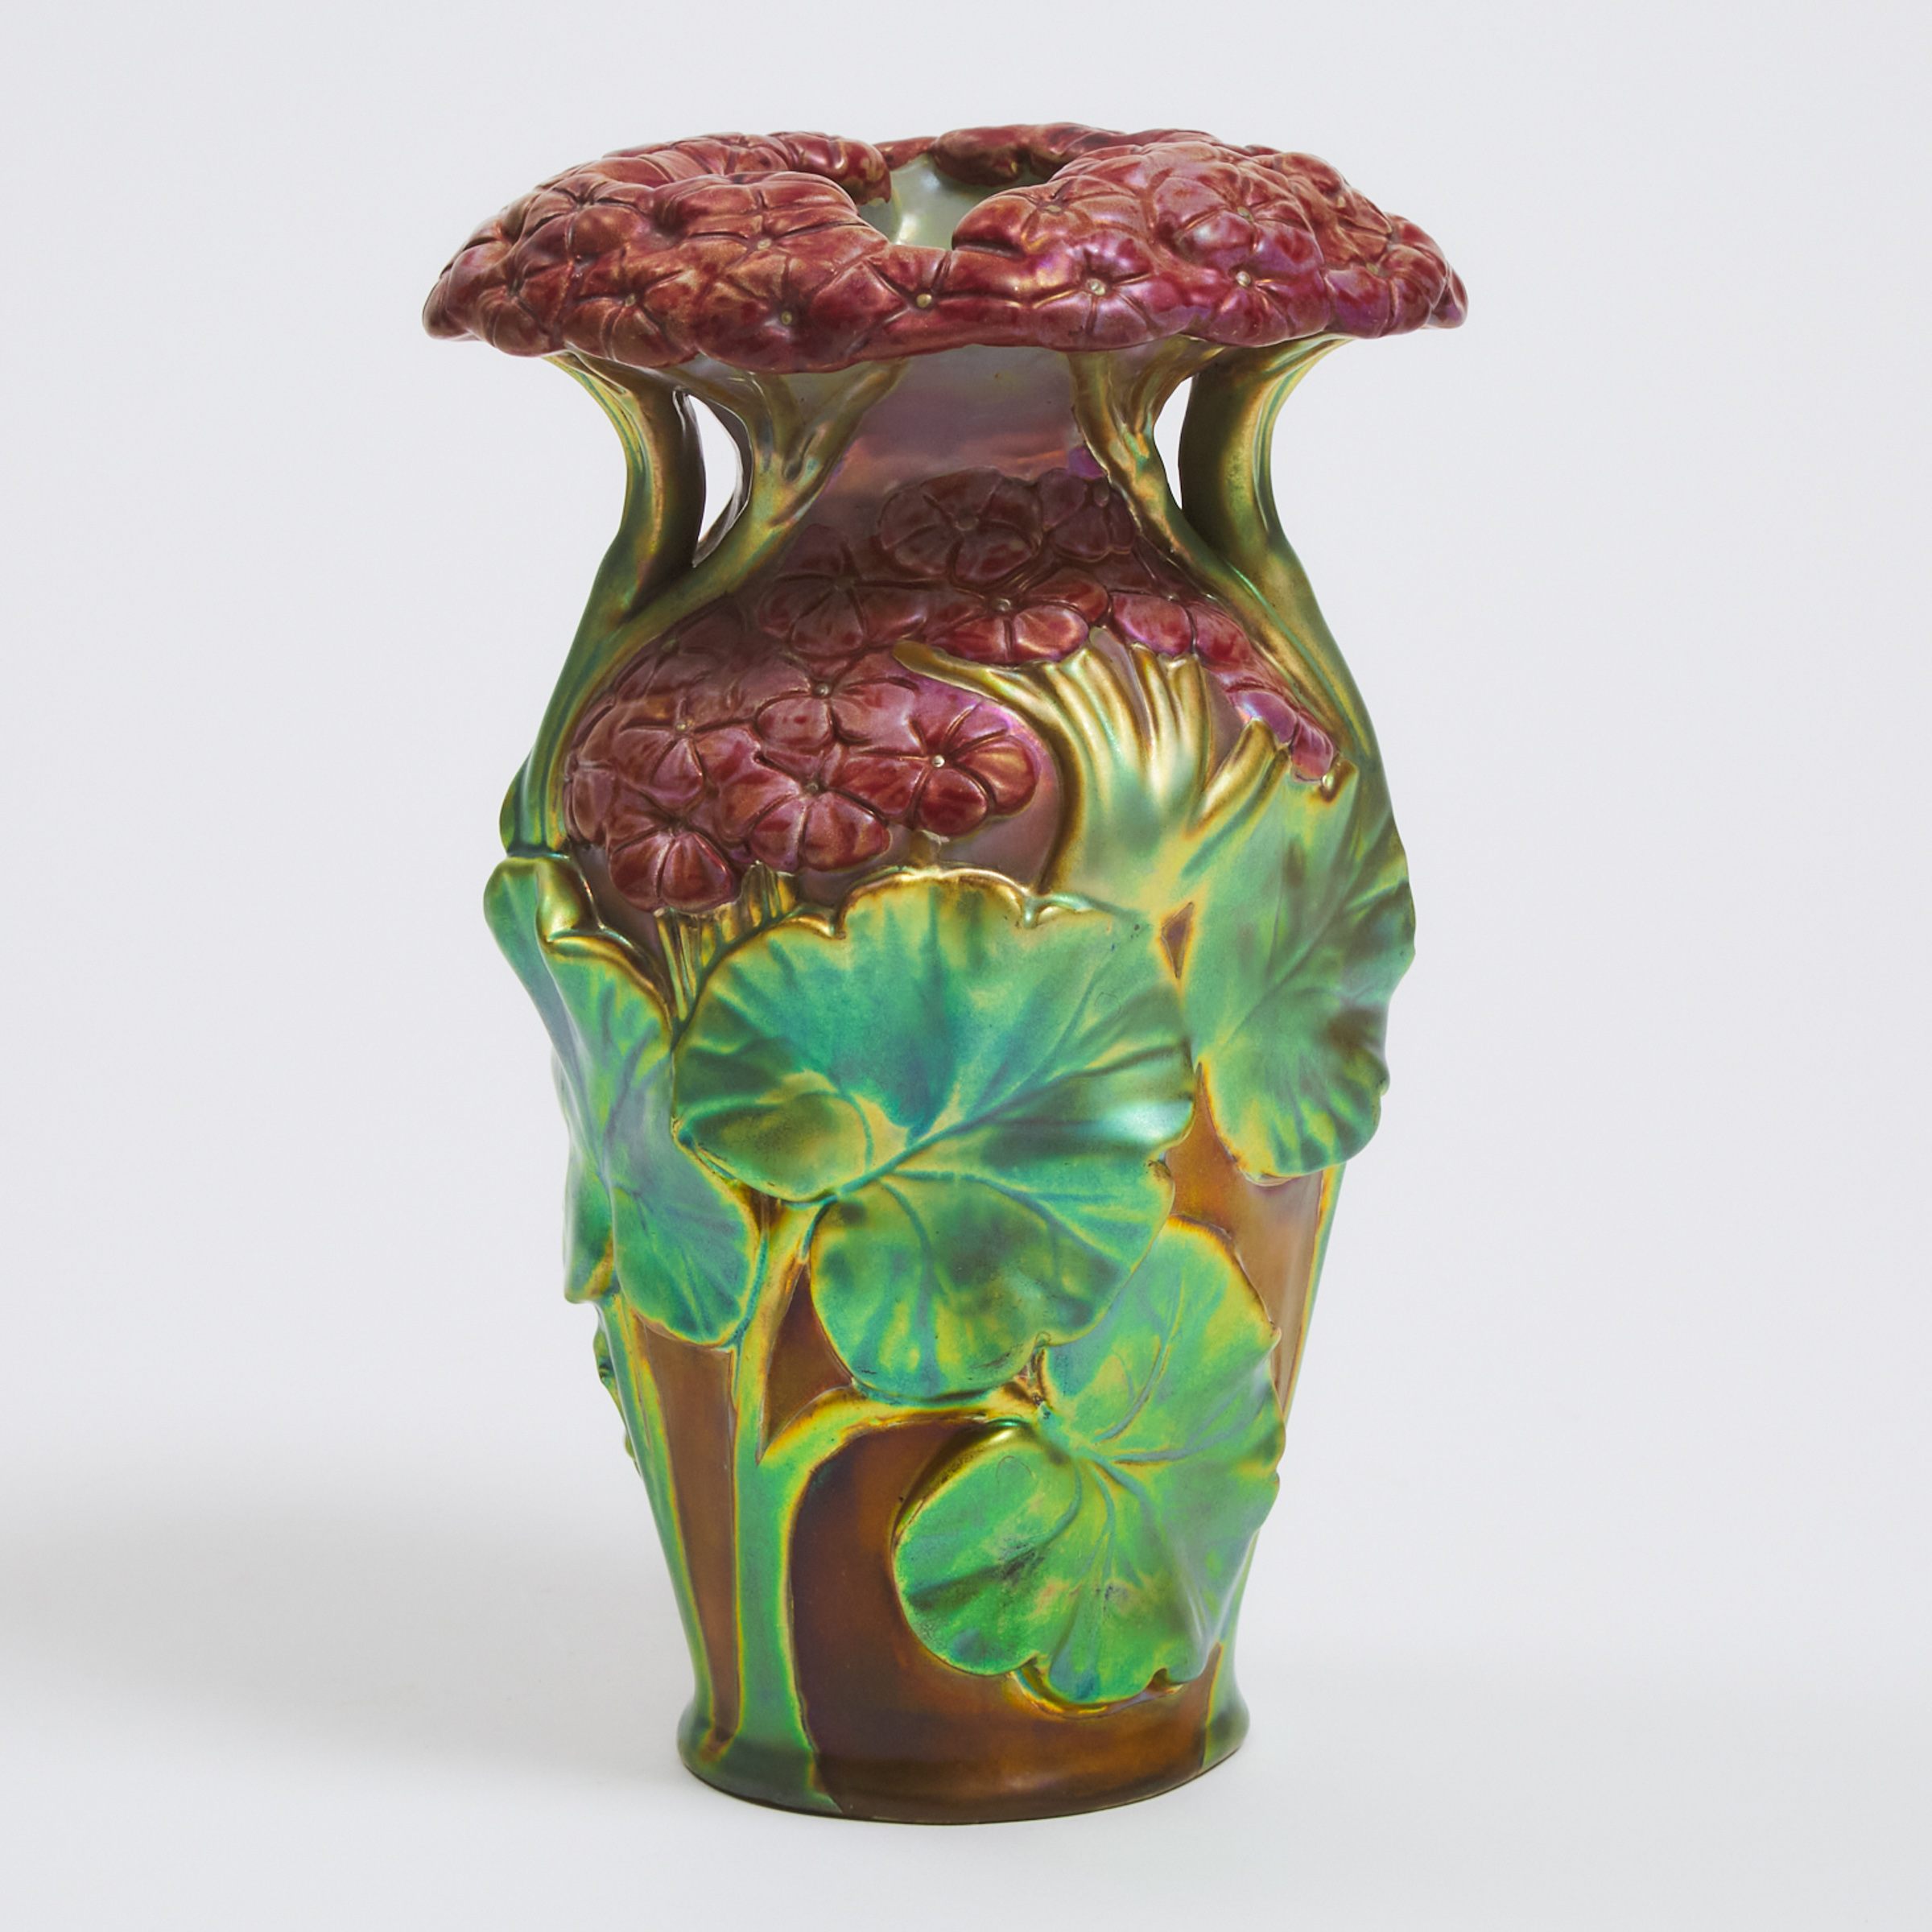 Zsolnay Iridescent Red and Green Glazed Geranium Vase, c.1900